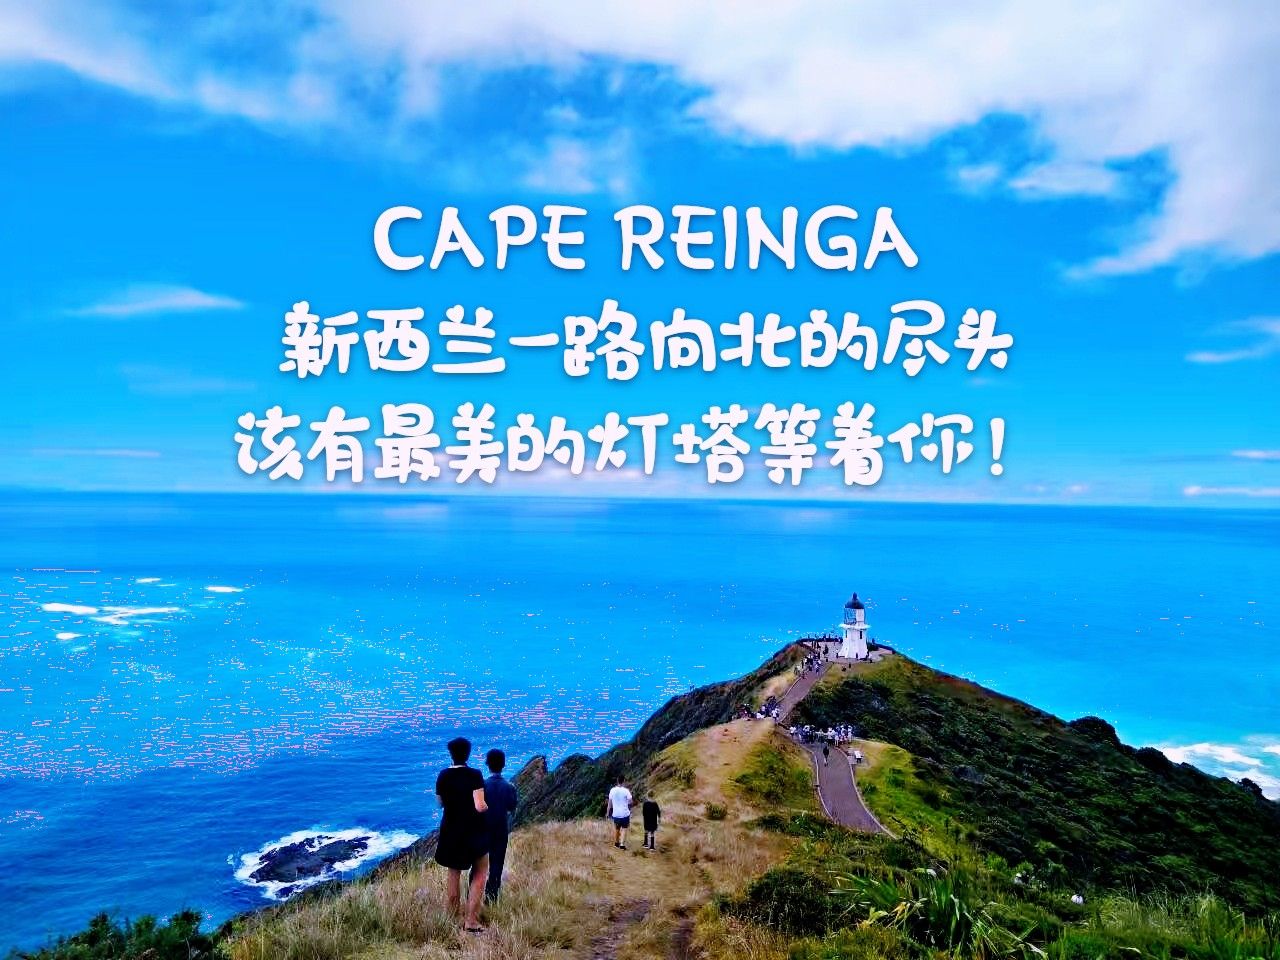 Cape Reinga，因为北望角的缘故，严格意义上并不是新西兰的最北部，但它的确是整个新西兰公路最